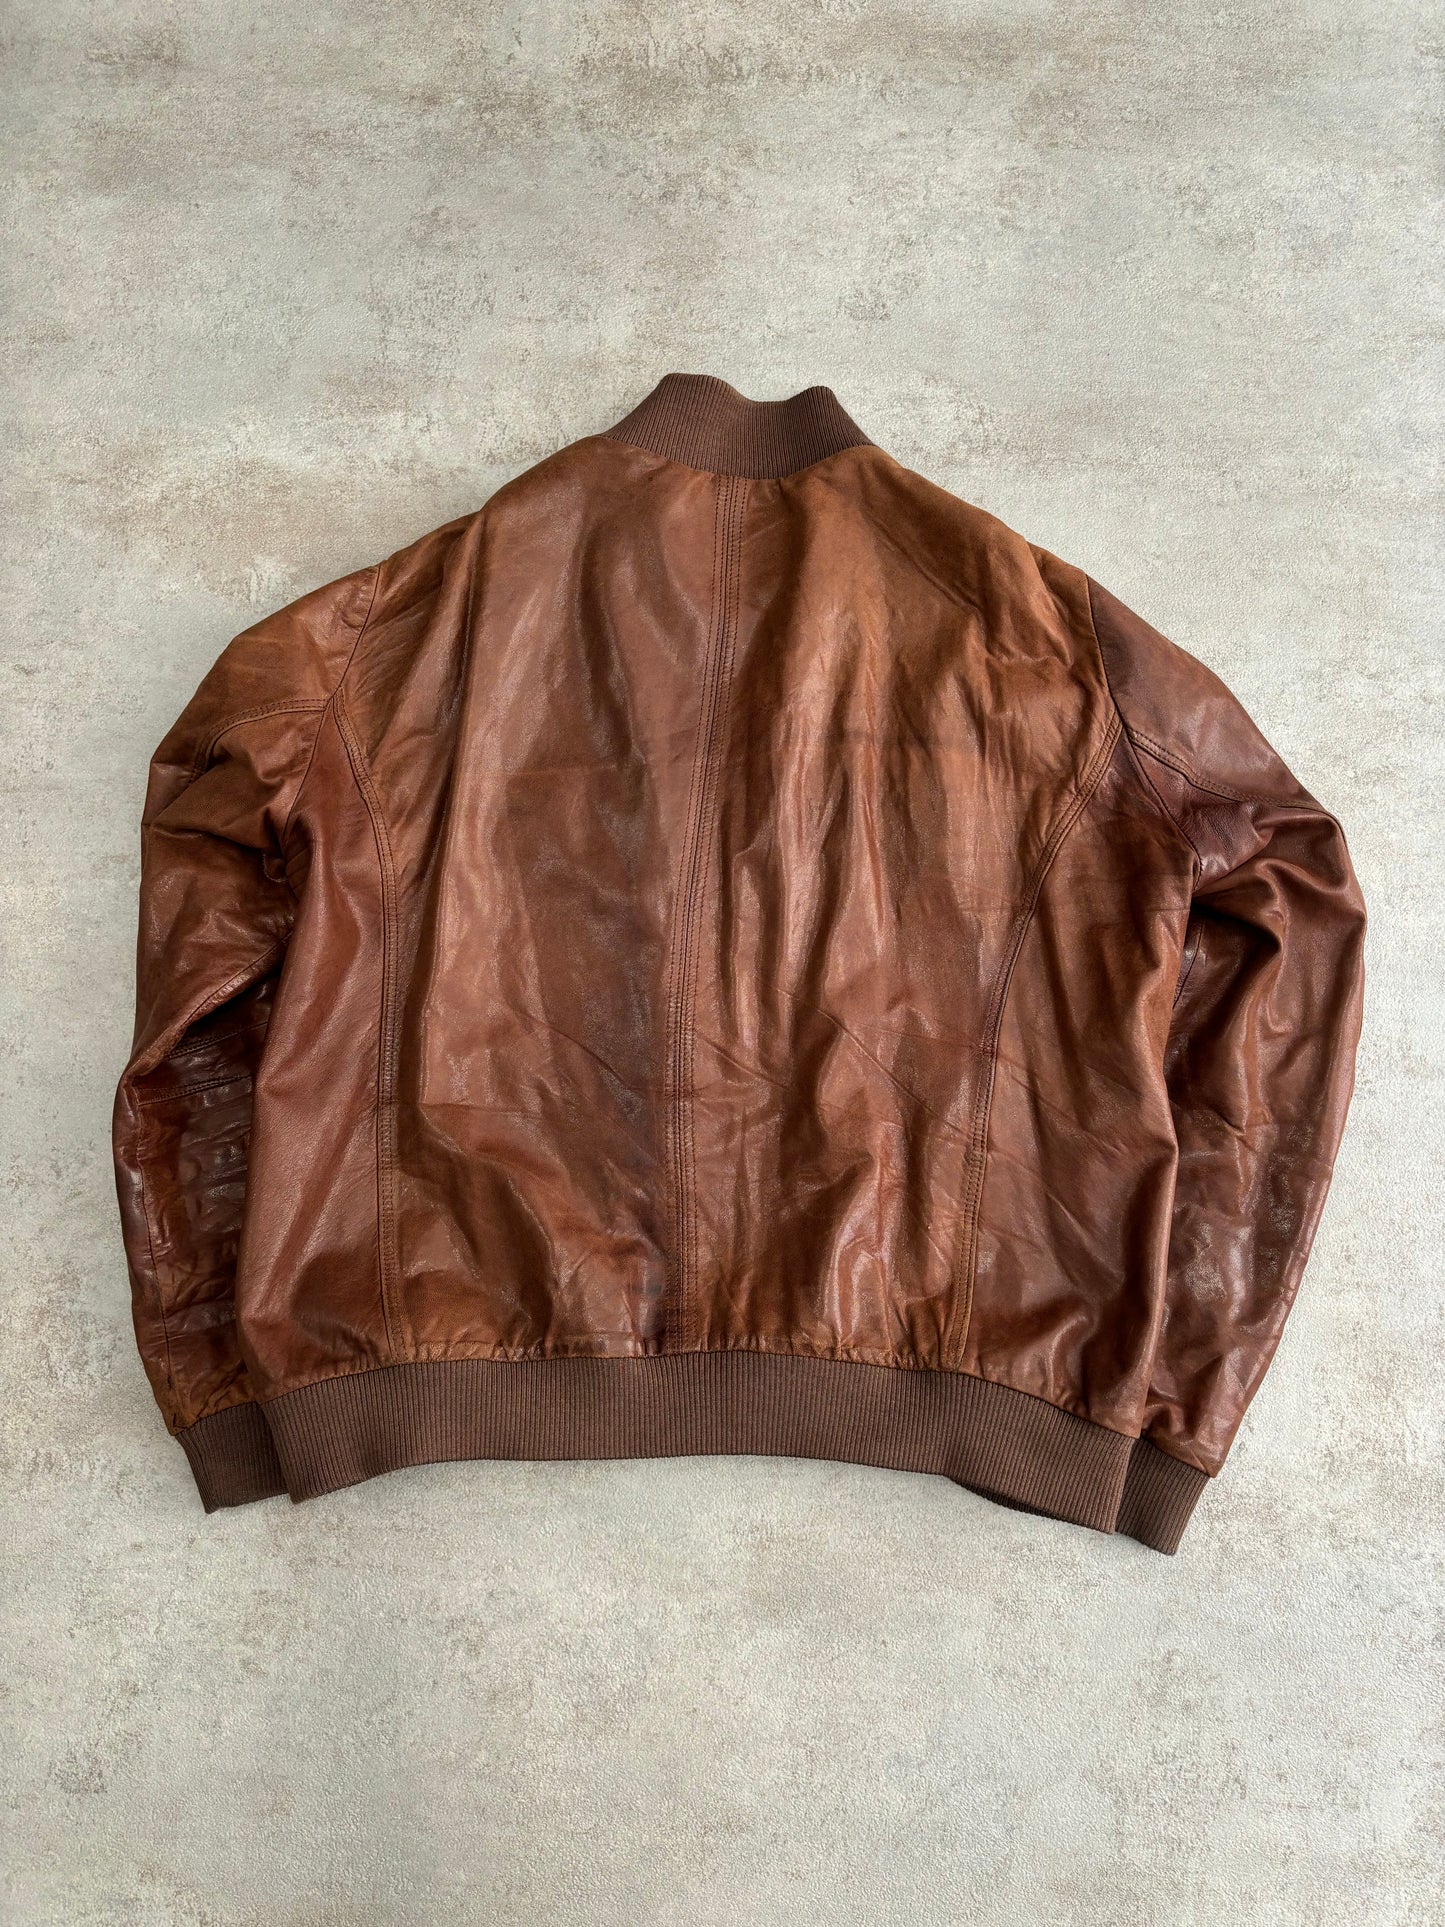 Peuterey Vintage Leather Jacket - L